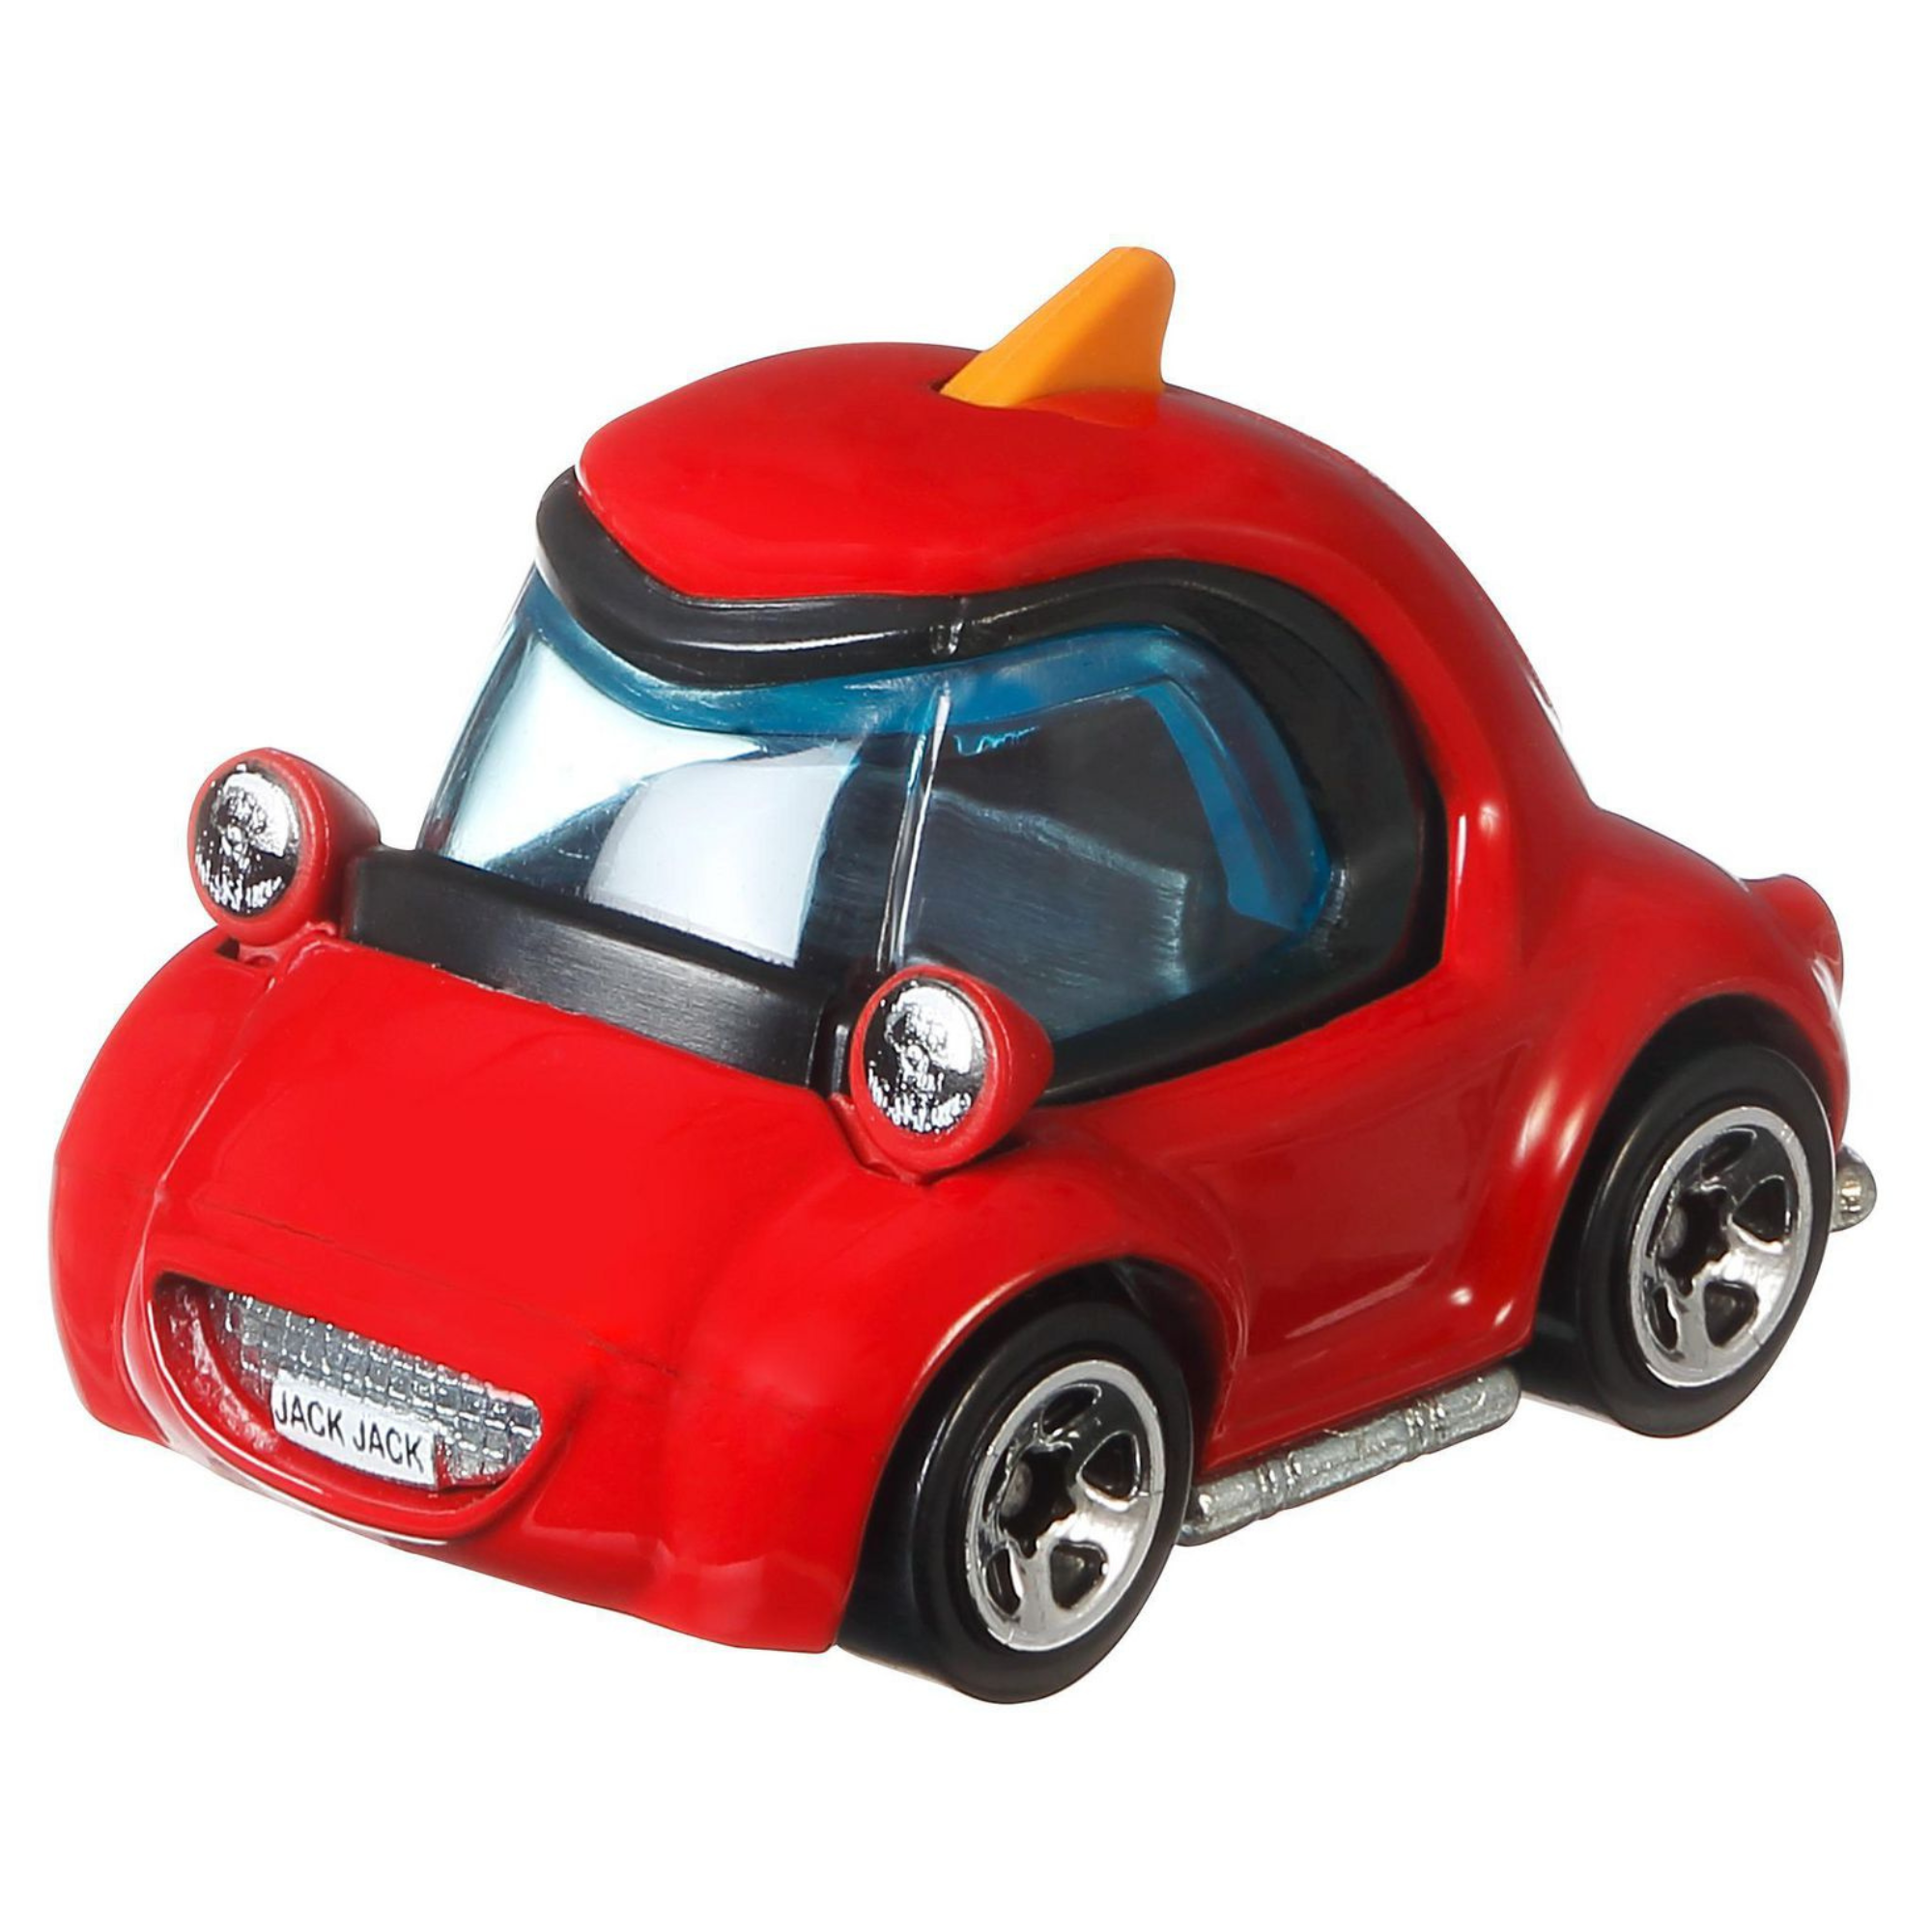 Hot Wheels Disney Pixar The Incredibles - Jack-Jack Character Car 1:64 Diecast - Toptoys2u